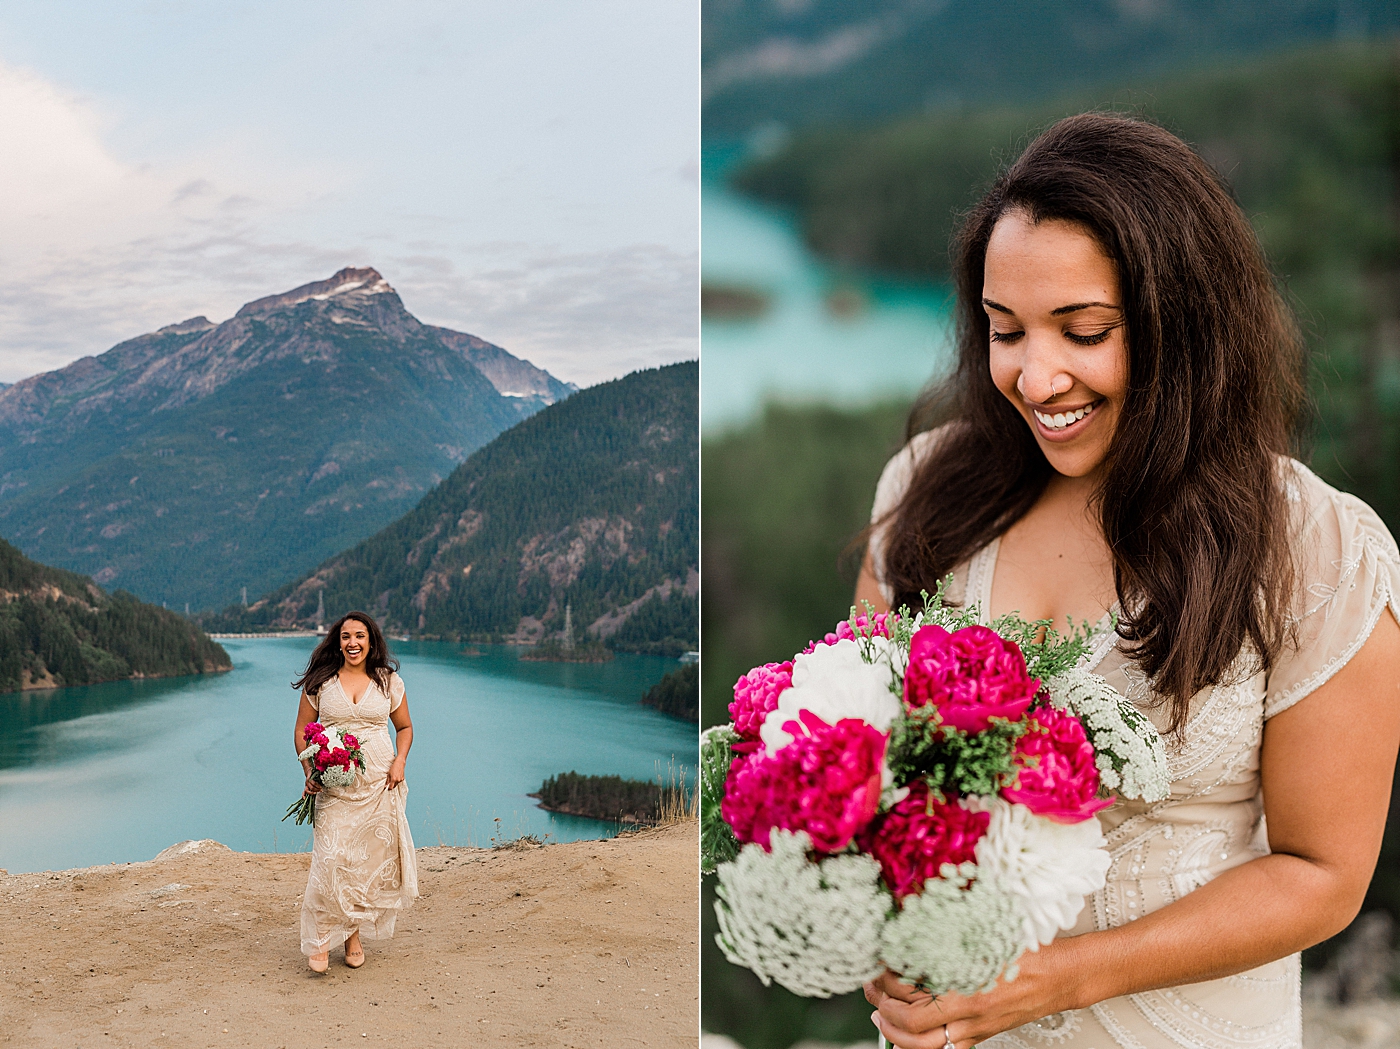 Bridal portraits at Diablo Lake | Megan Montalvo Photography